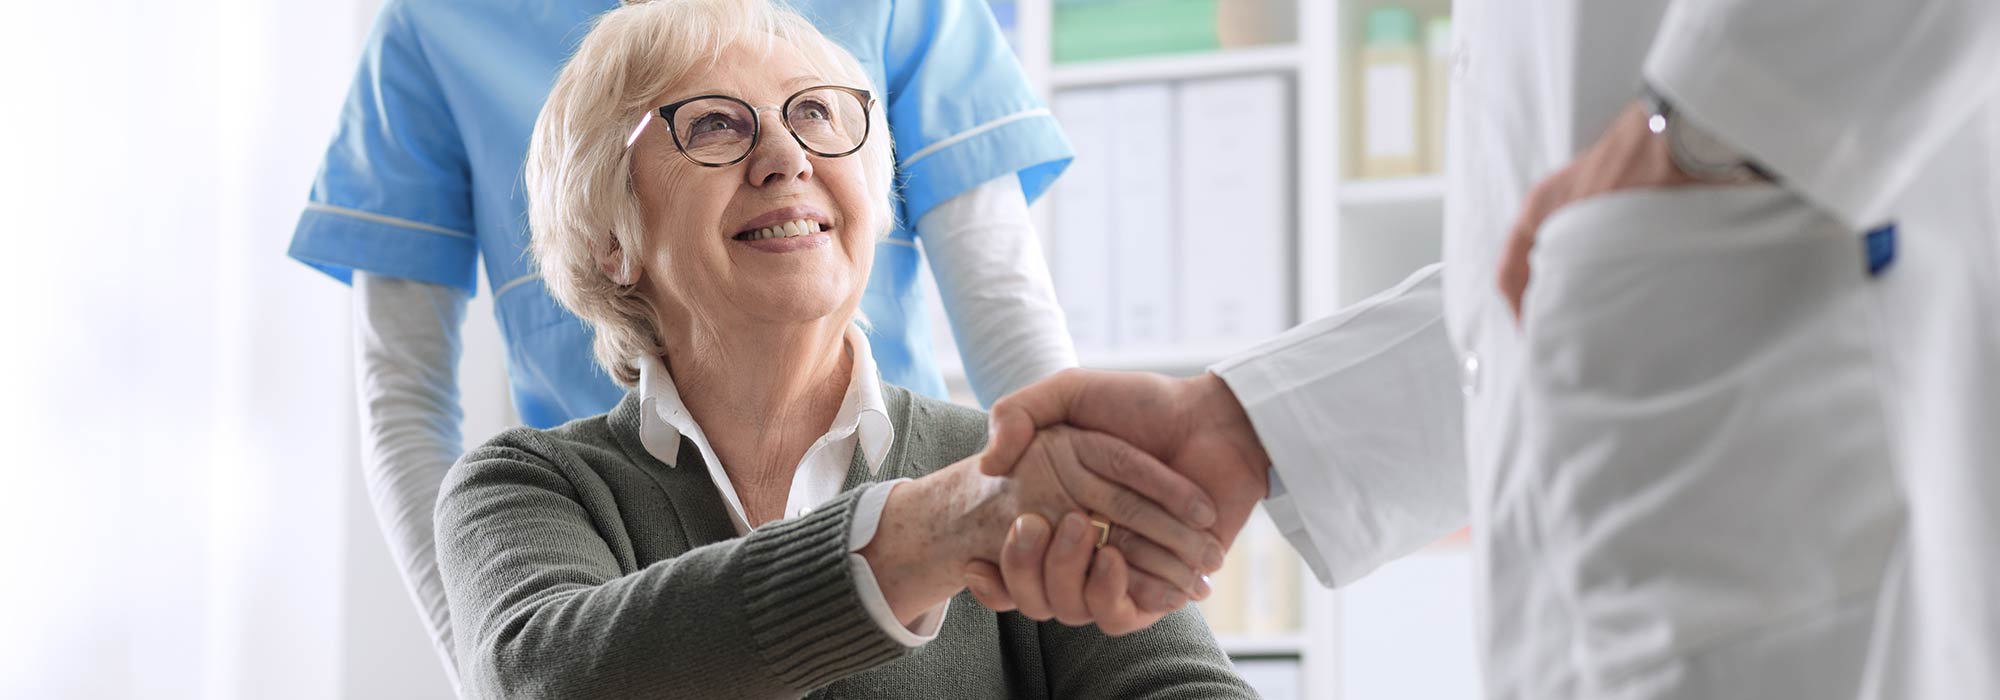 Caregiver Holding Patient's Hand